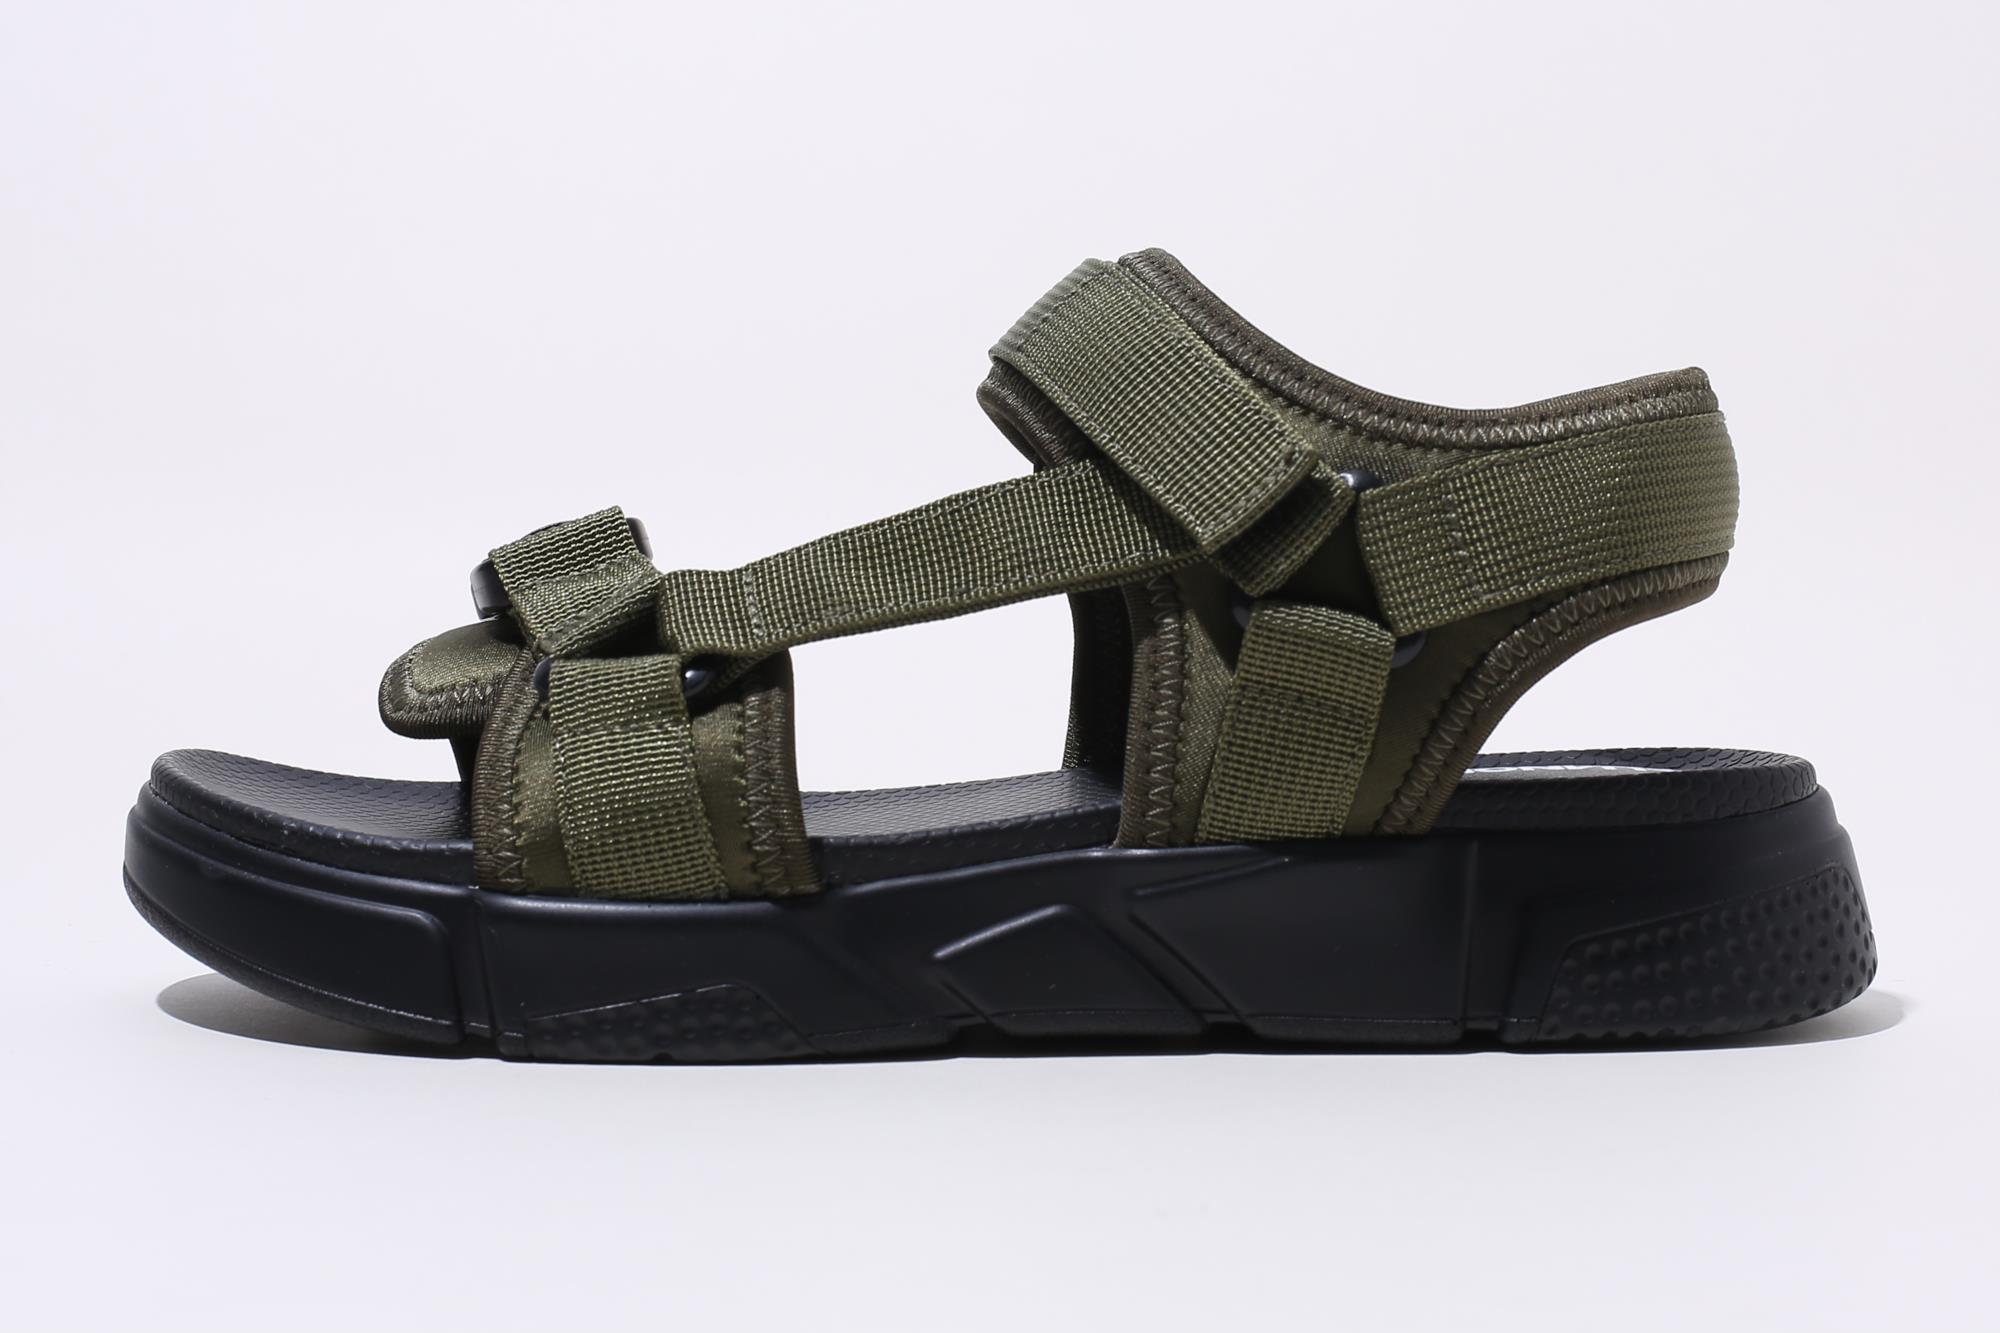 Newest design top quality luxury fashion platform women sandals